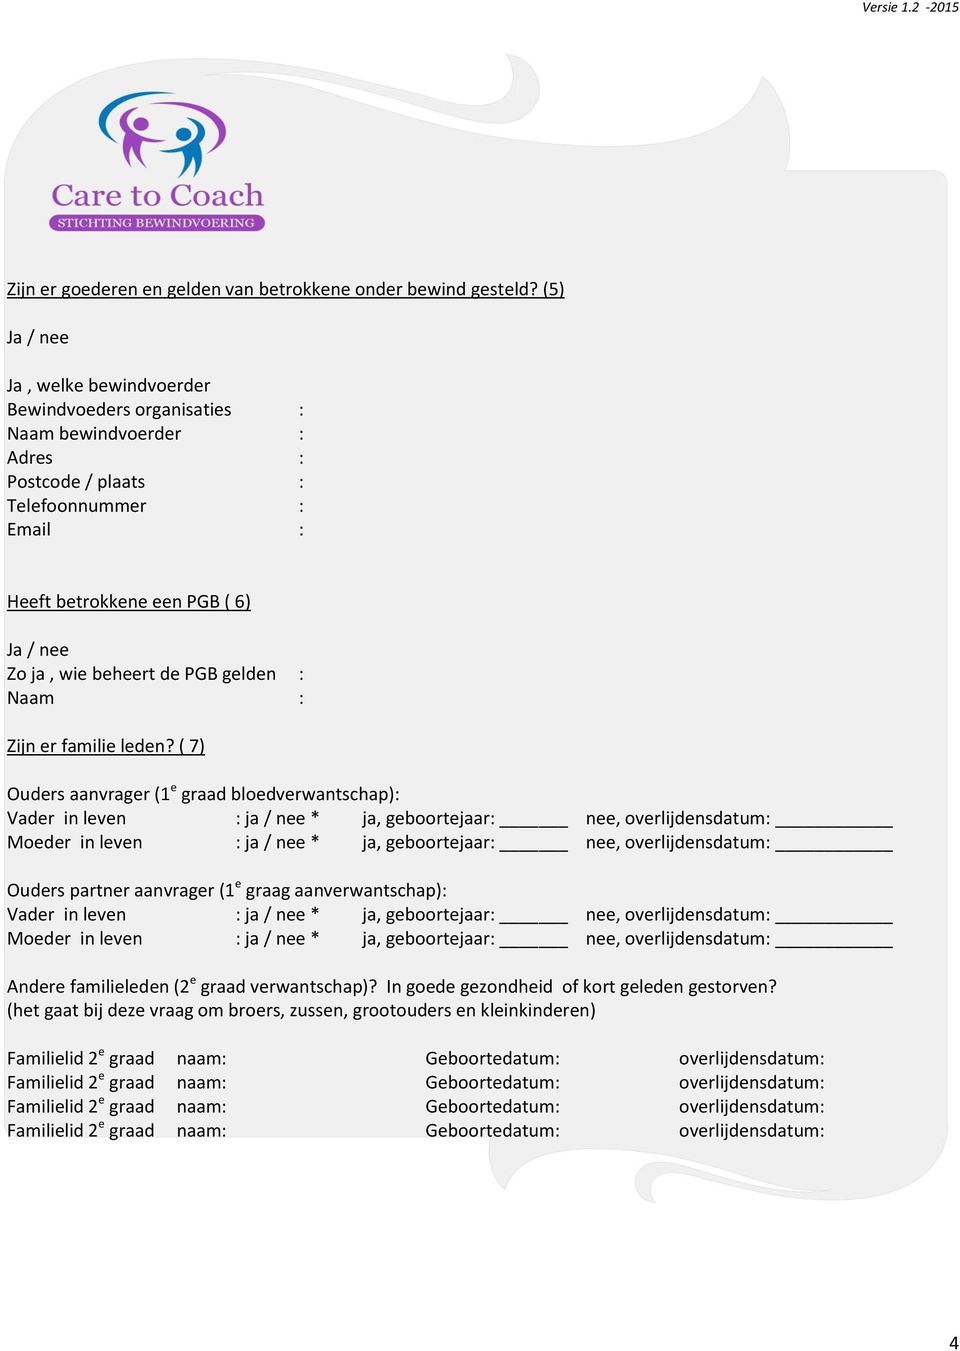 Intakeformulier Mentorschap Care to Coach - PDF Gratis download